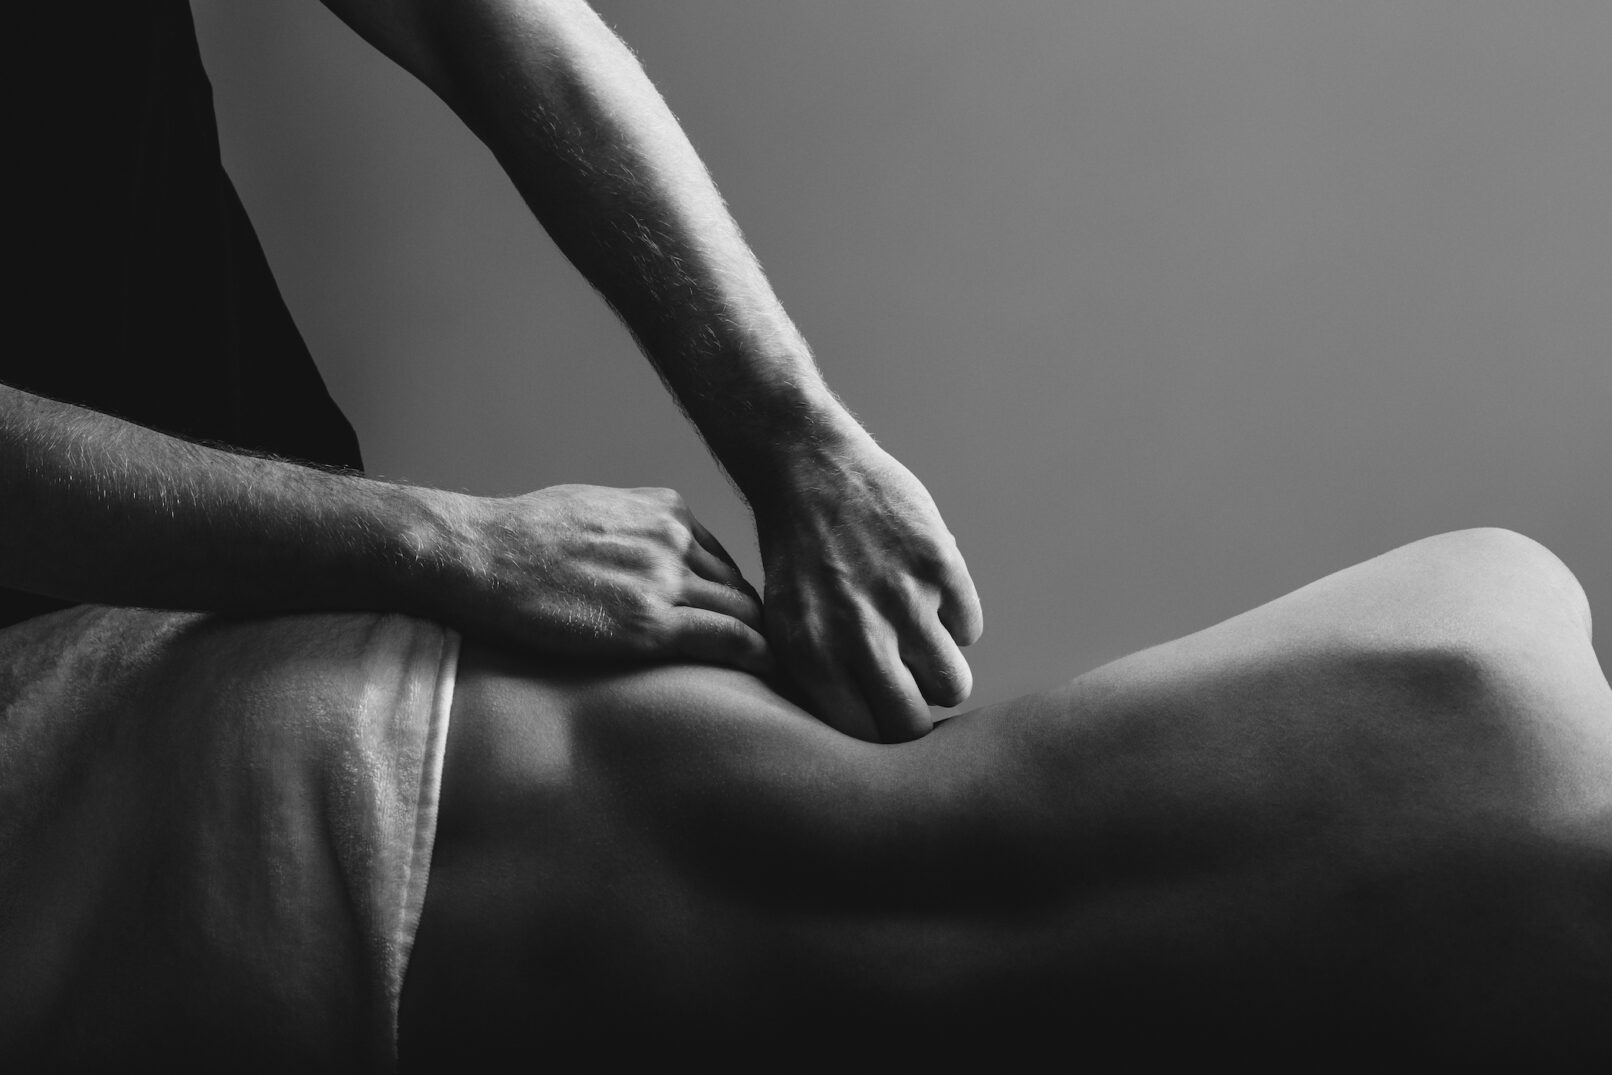 Moma masaż — sesja reklamowa studia masażu 1